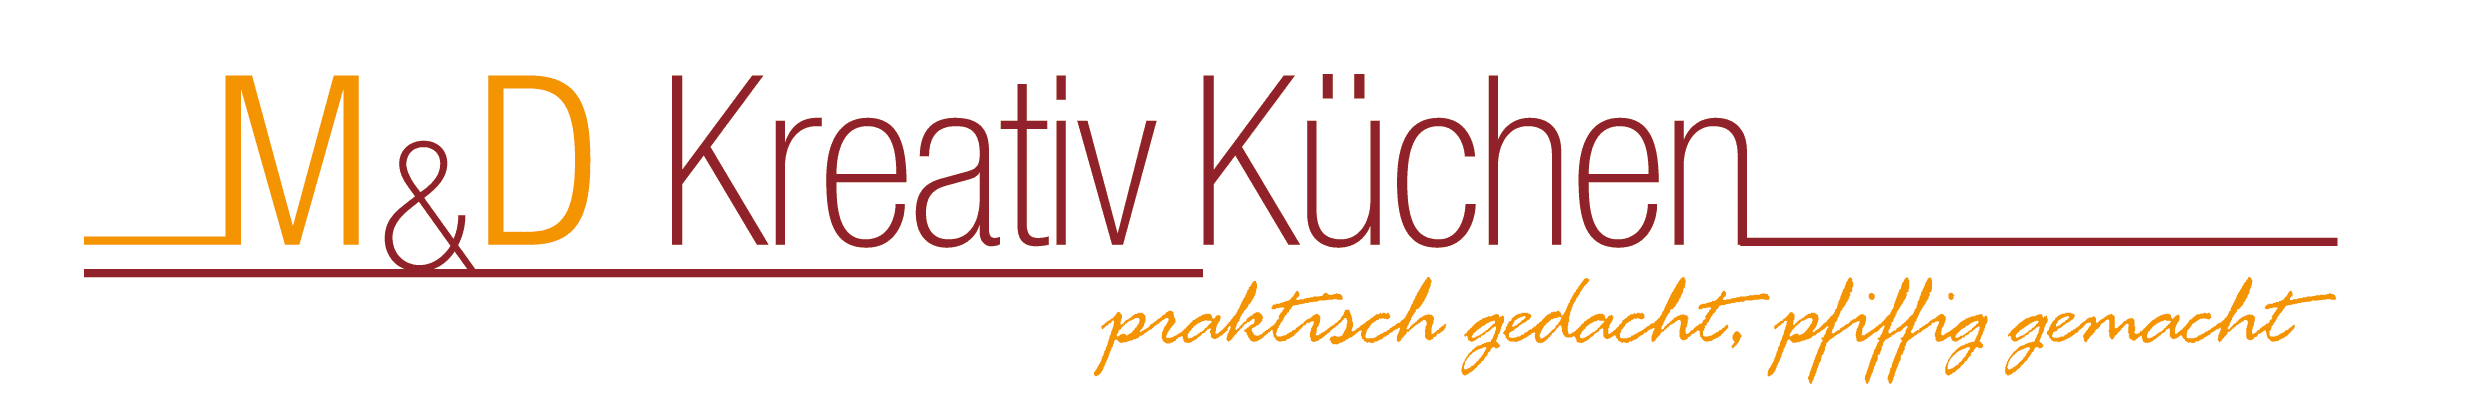 KreativKuechen Logo